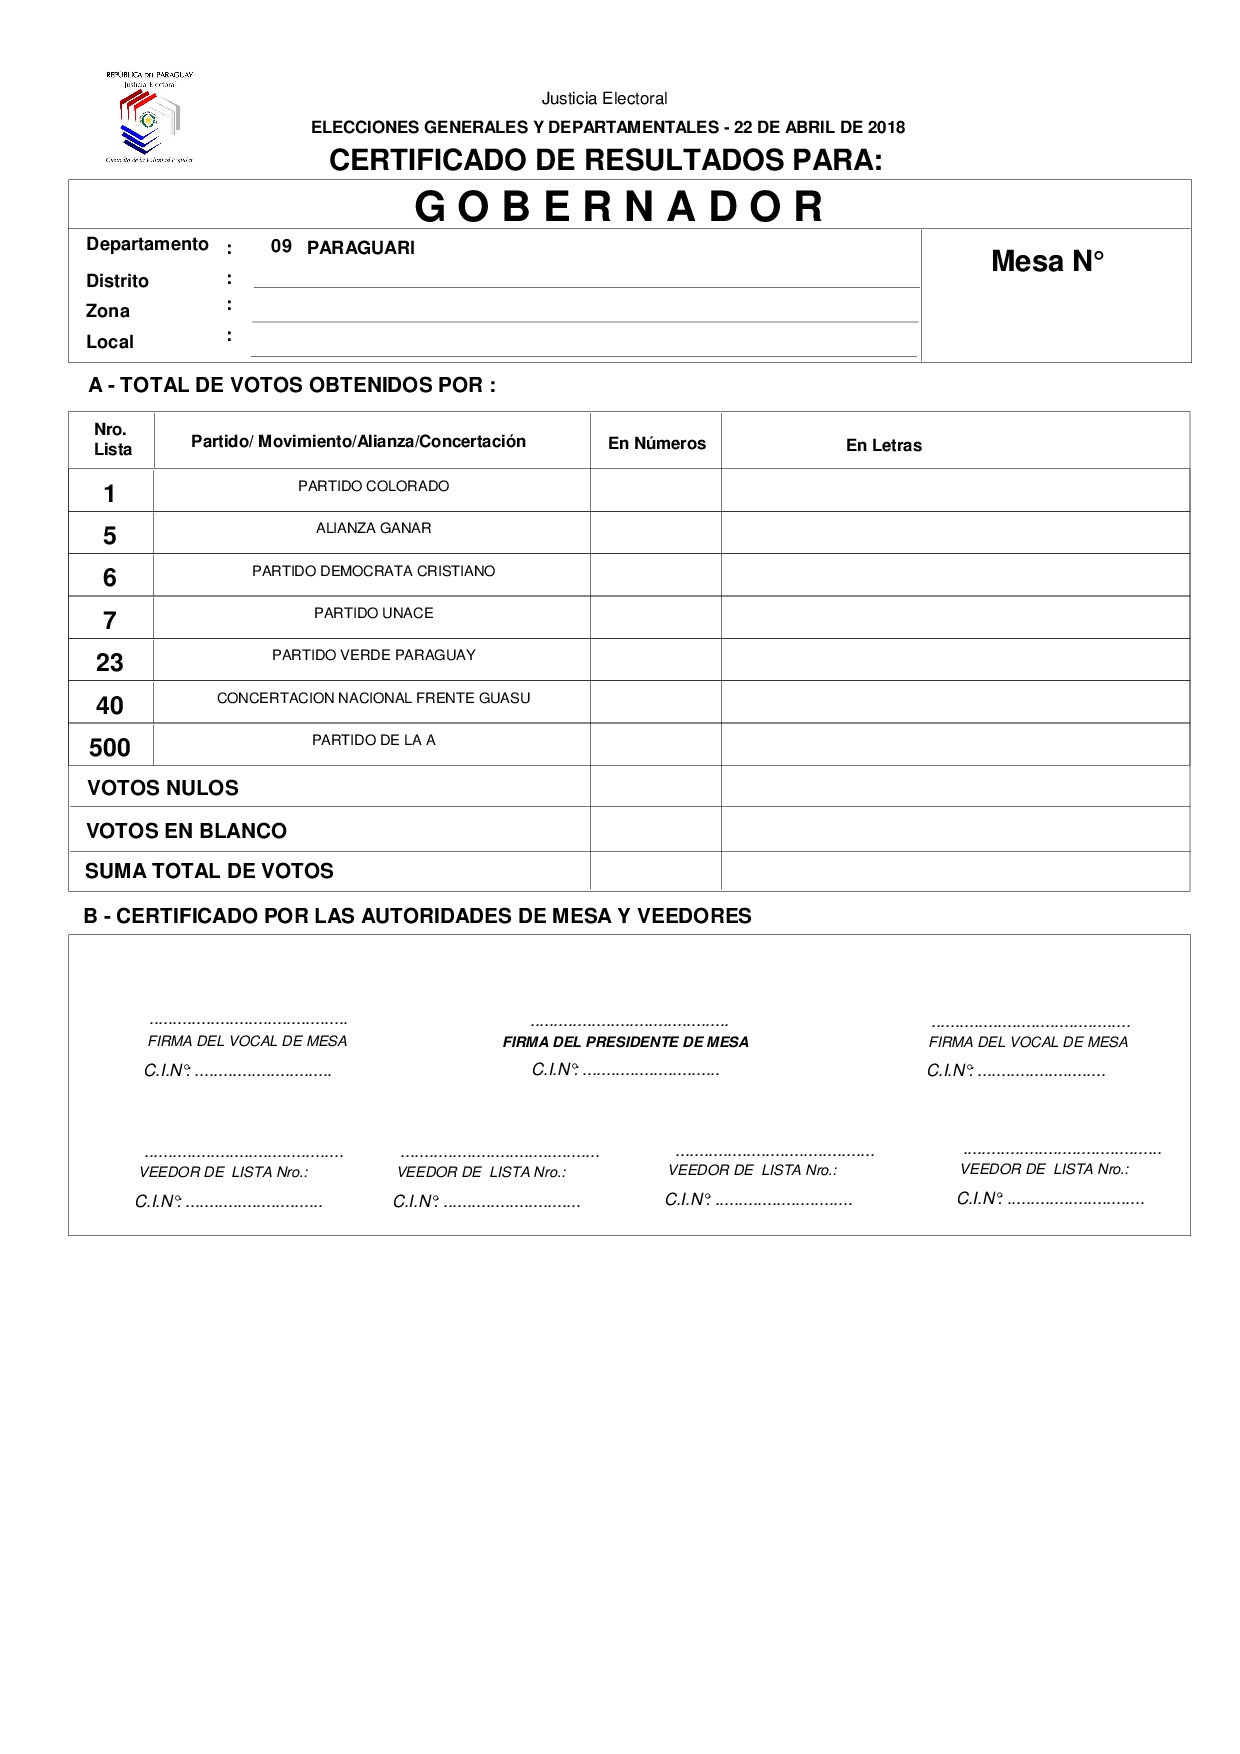 Certificado de Resultados Para GOBERNADOR de PARAGUARI